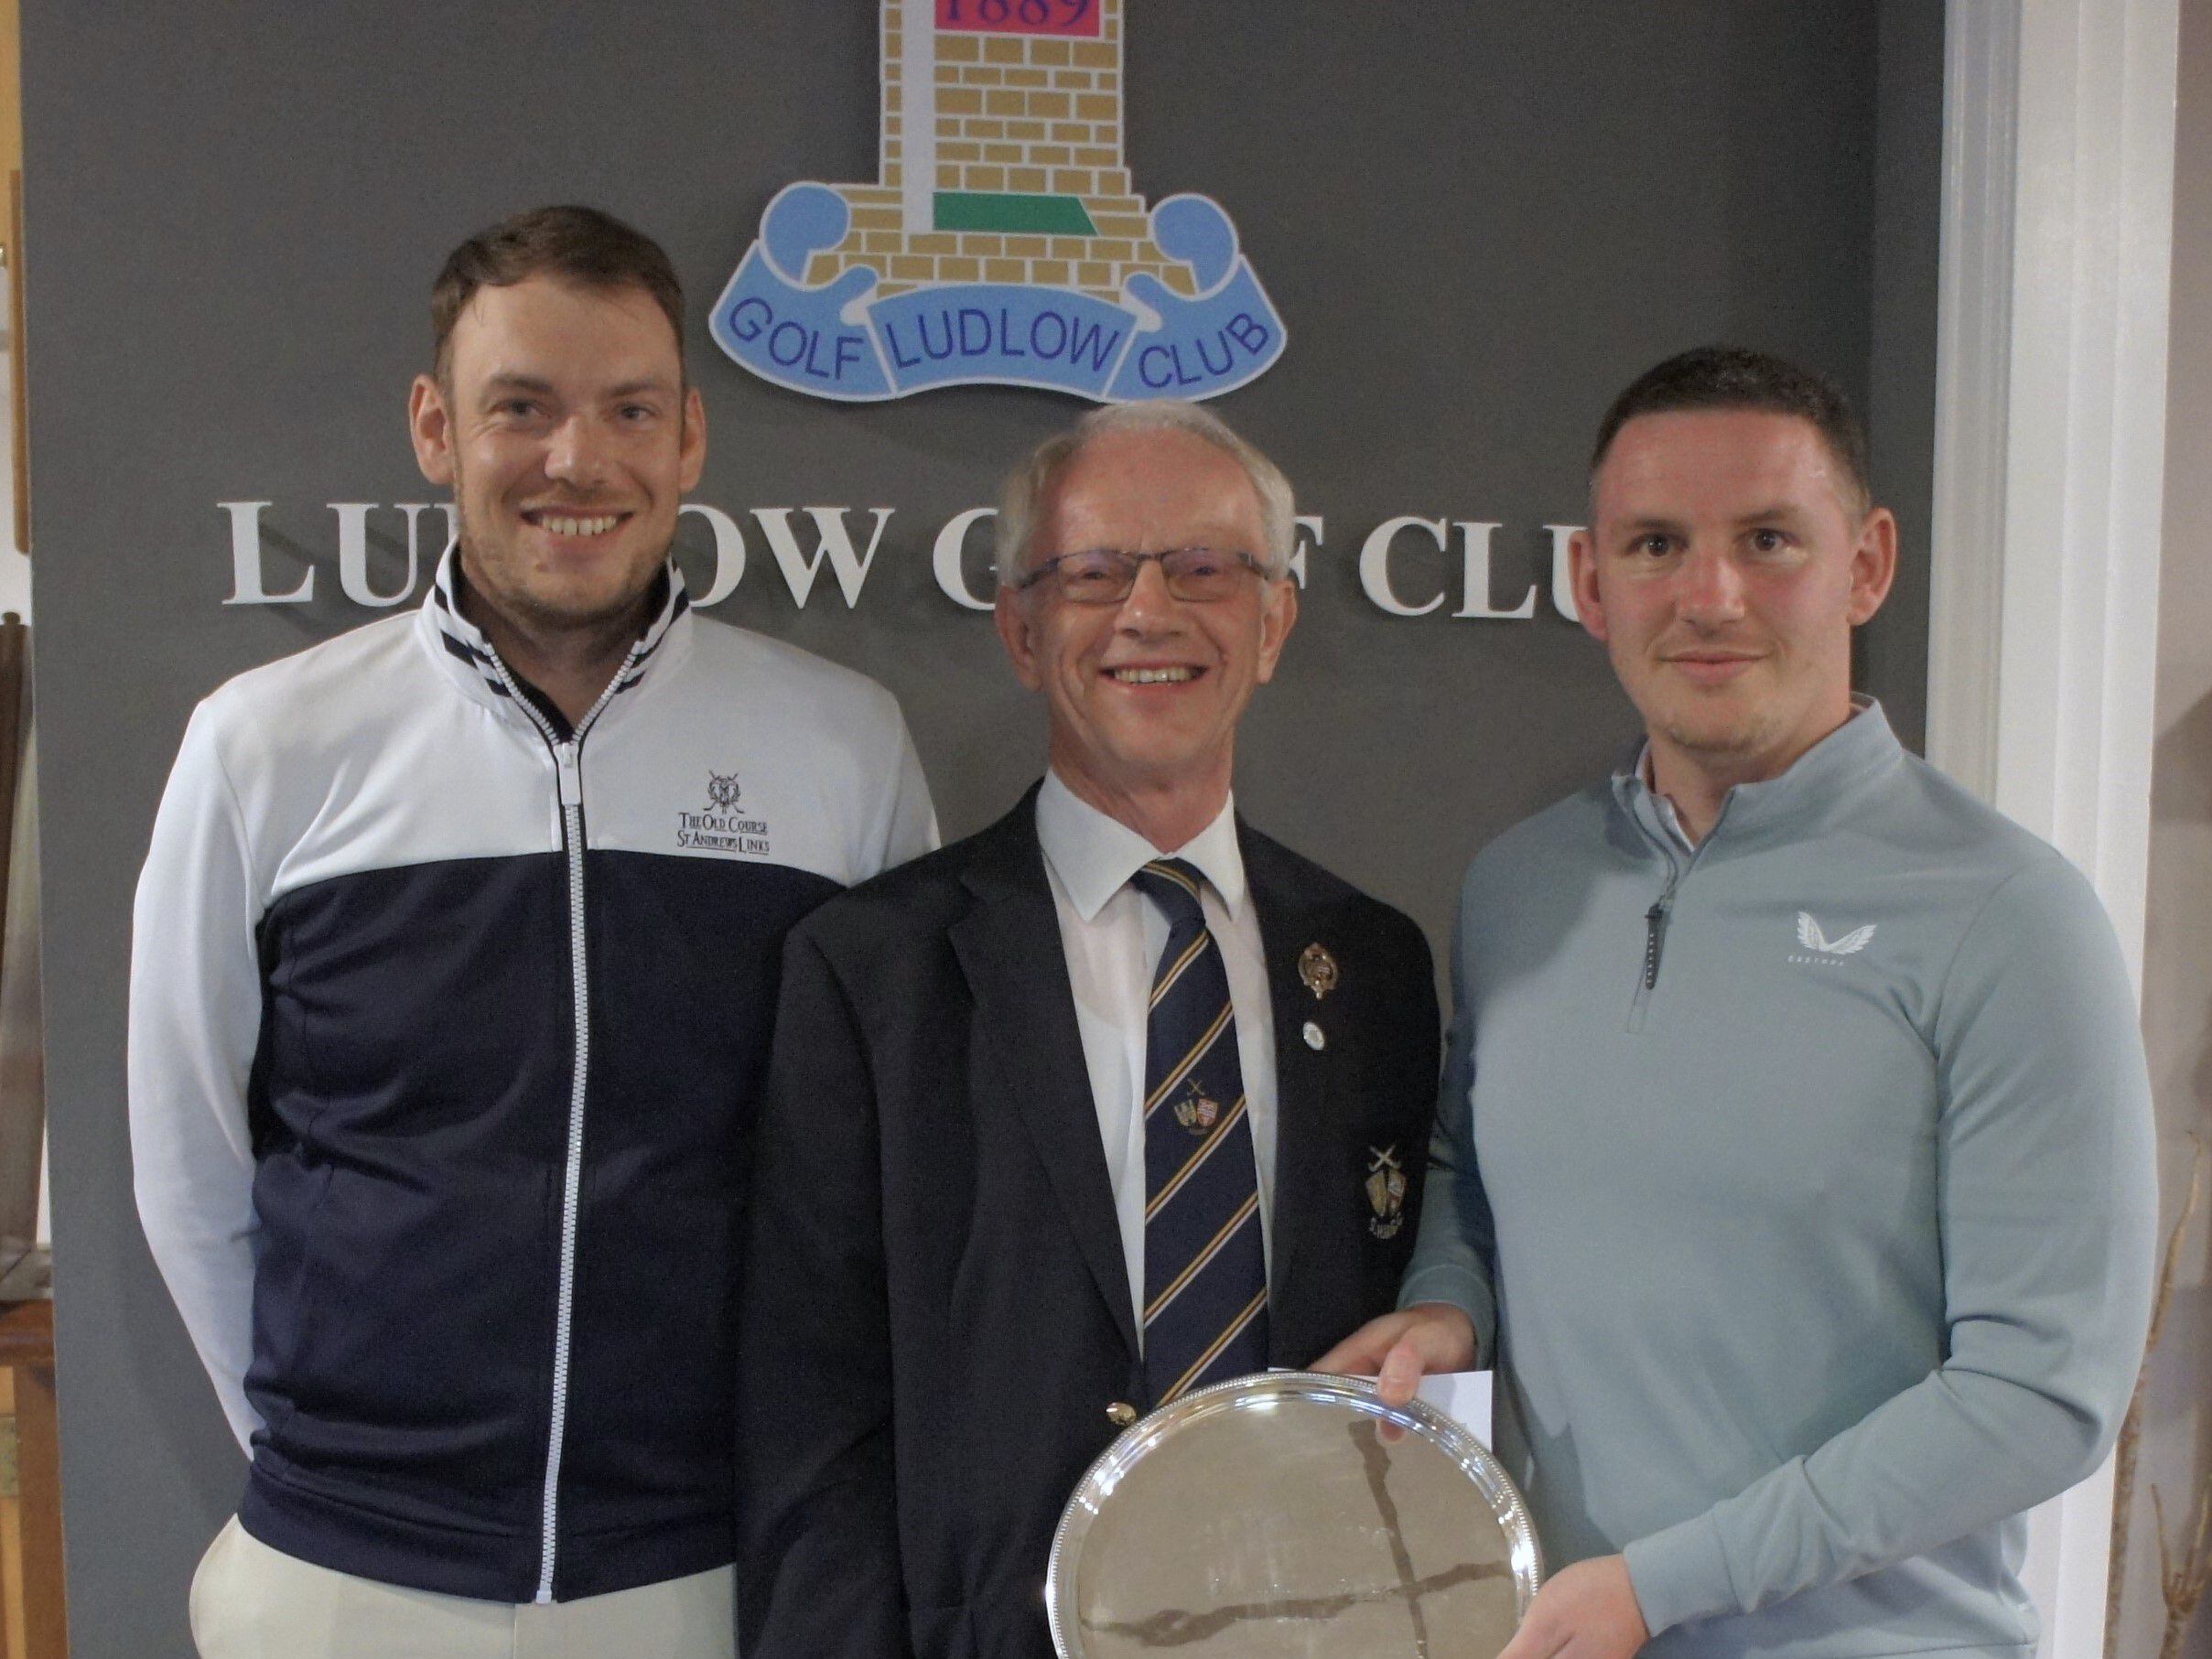 Ludlow Golf Club duo retain Salver on home course